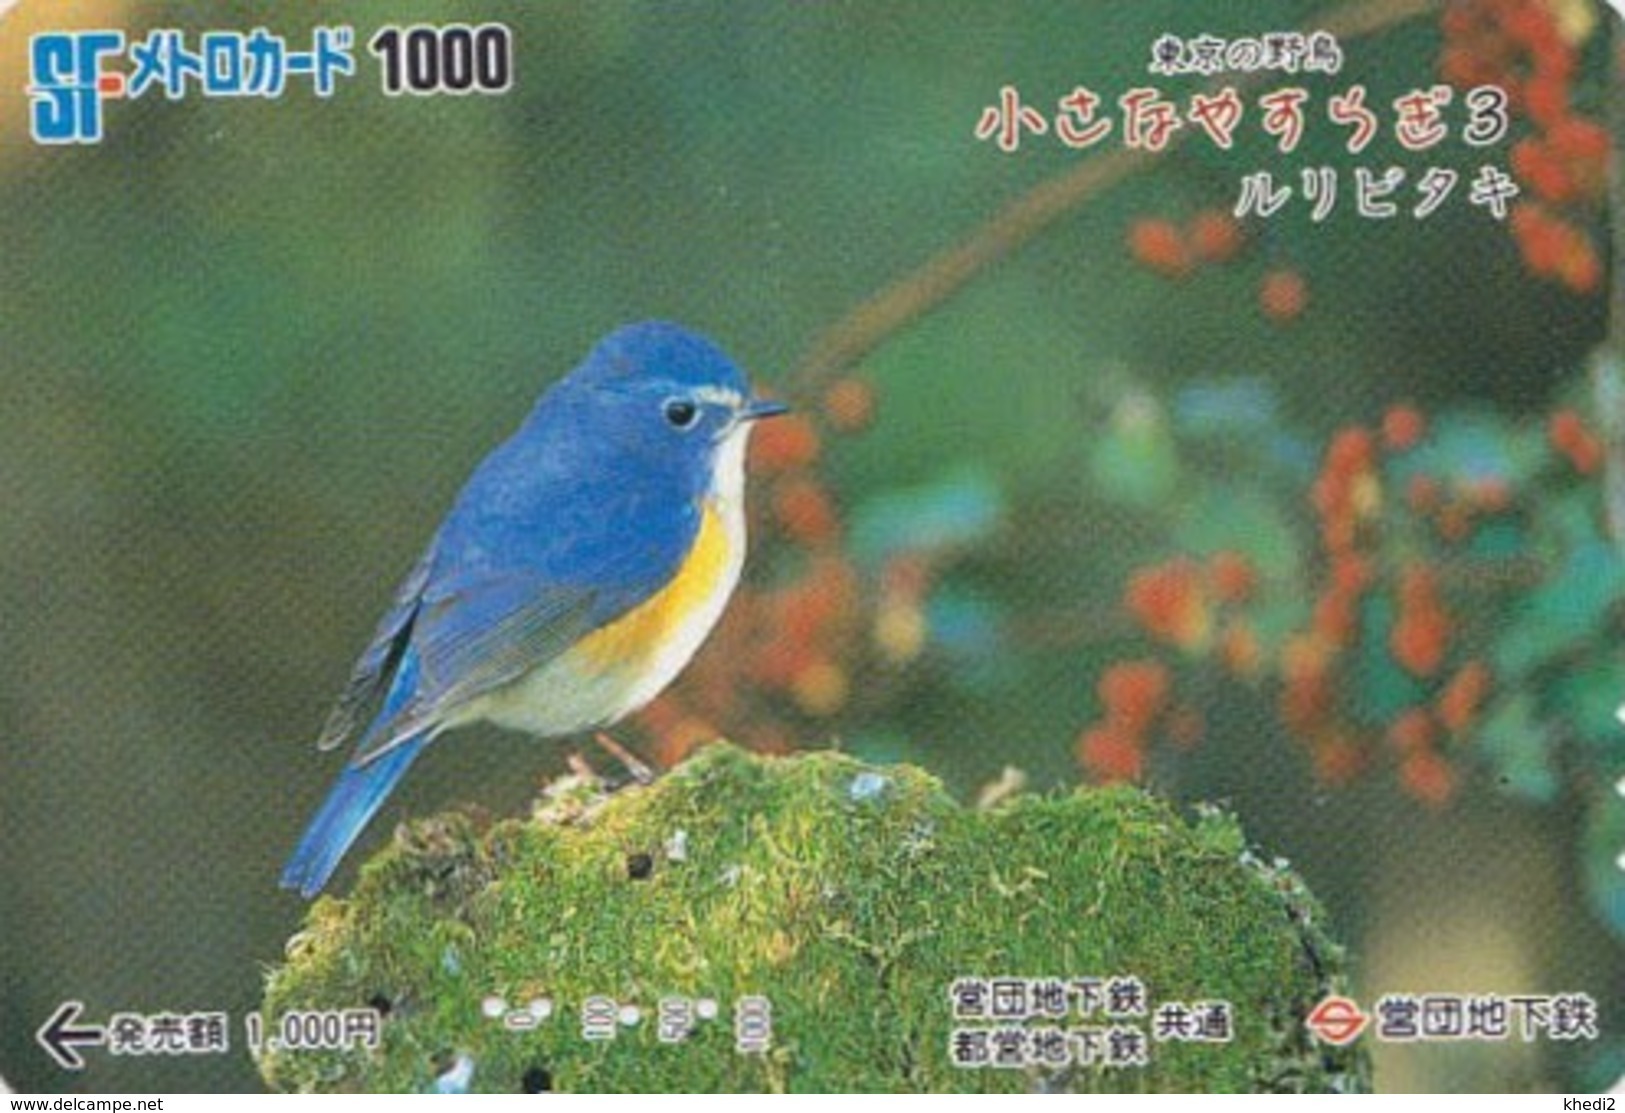 Carte Japon - Animal - Série OISEAUX 3/5 - OISEAU - GOBEMOUCHE - FLYCATCHER BIRD Japan Metro Card - 4500 - Sperlingsvögel & Singvögel